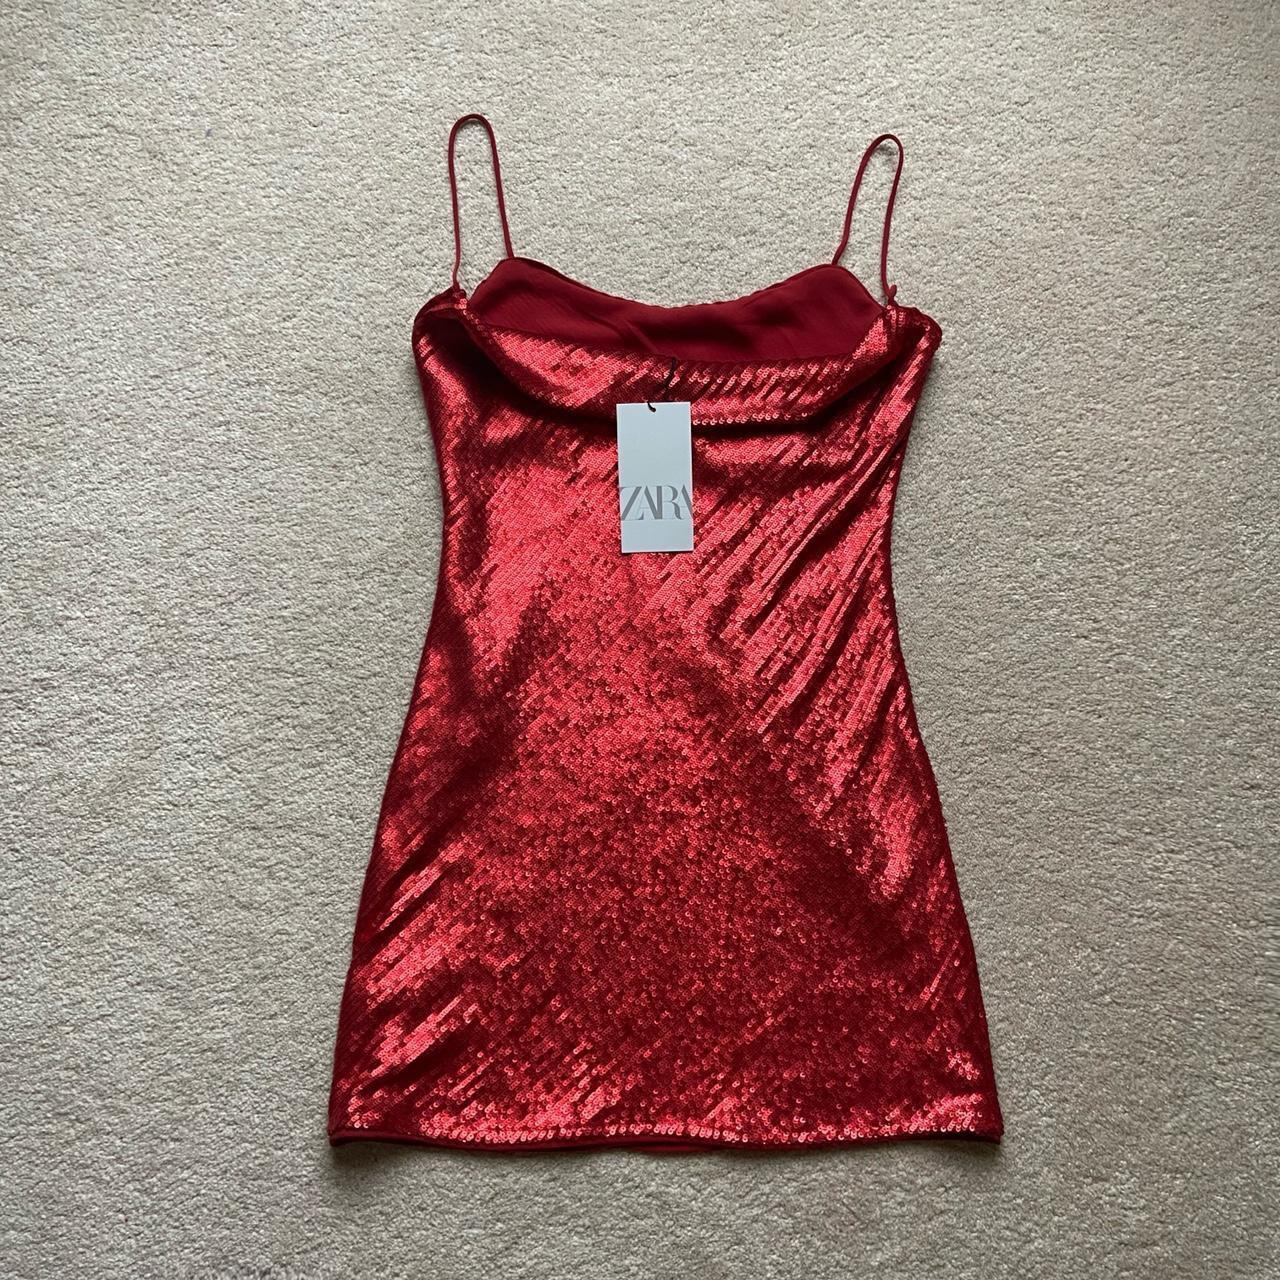 Zara Red Sequin Mini Dress Strappy Size S Small... - Depop